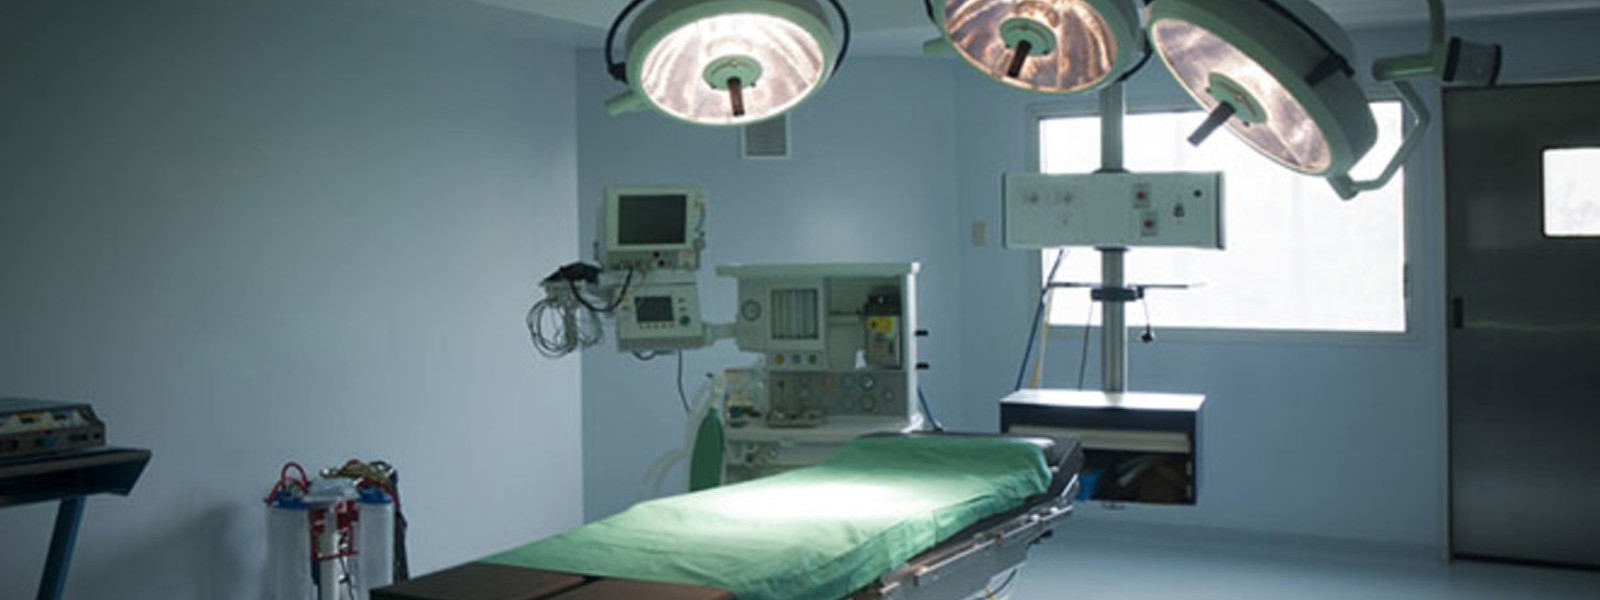 Surgeries resume at Peradeniya Teaching Hospital